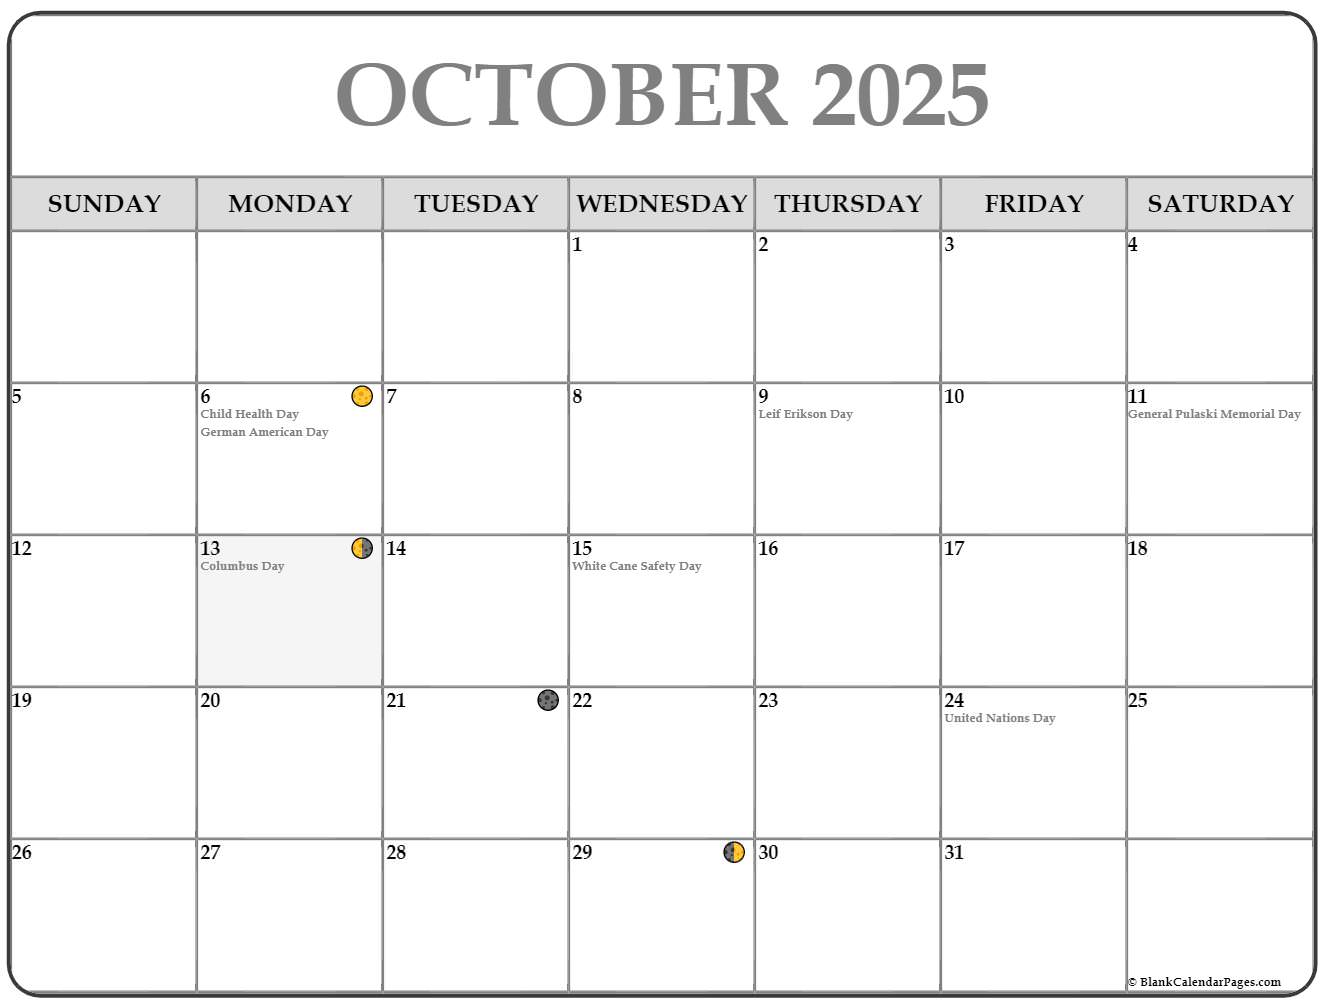 october-2025-editable-calendar-with-holidays